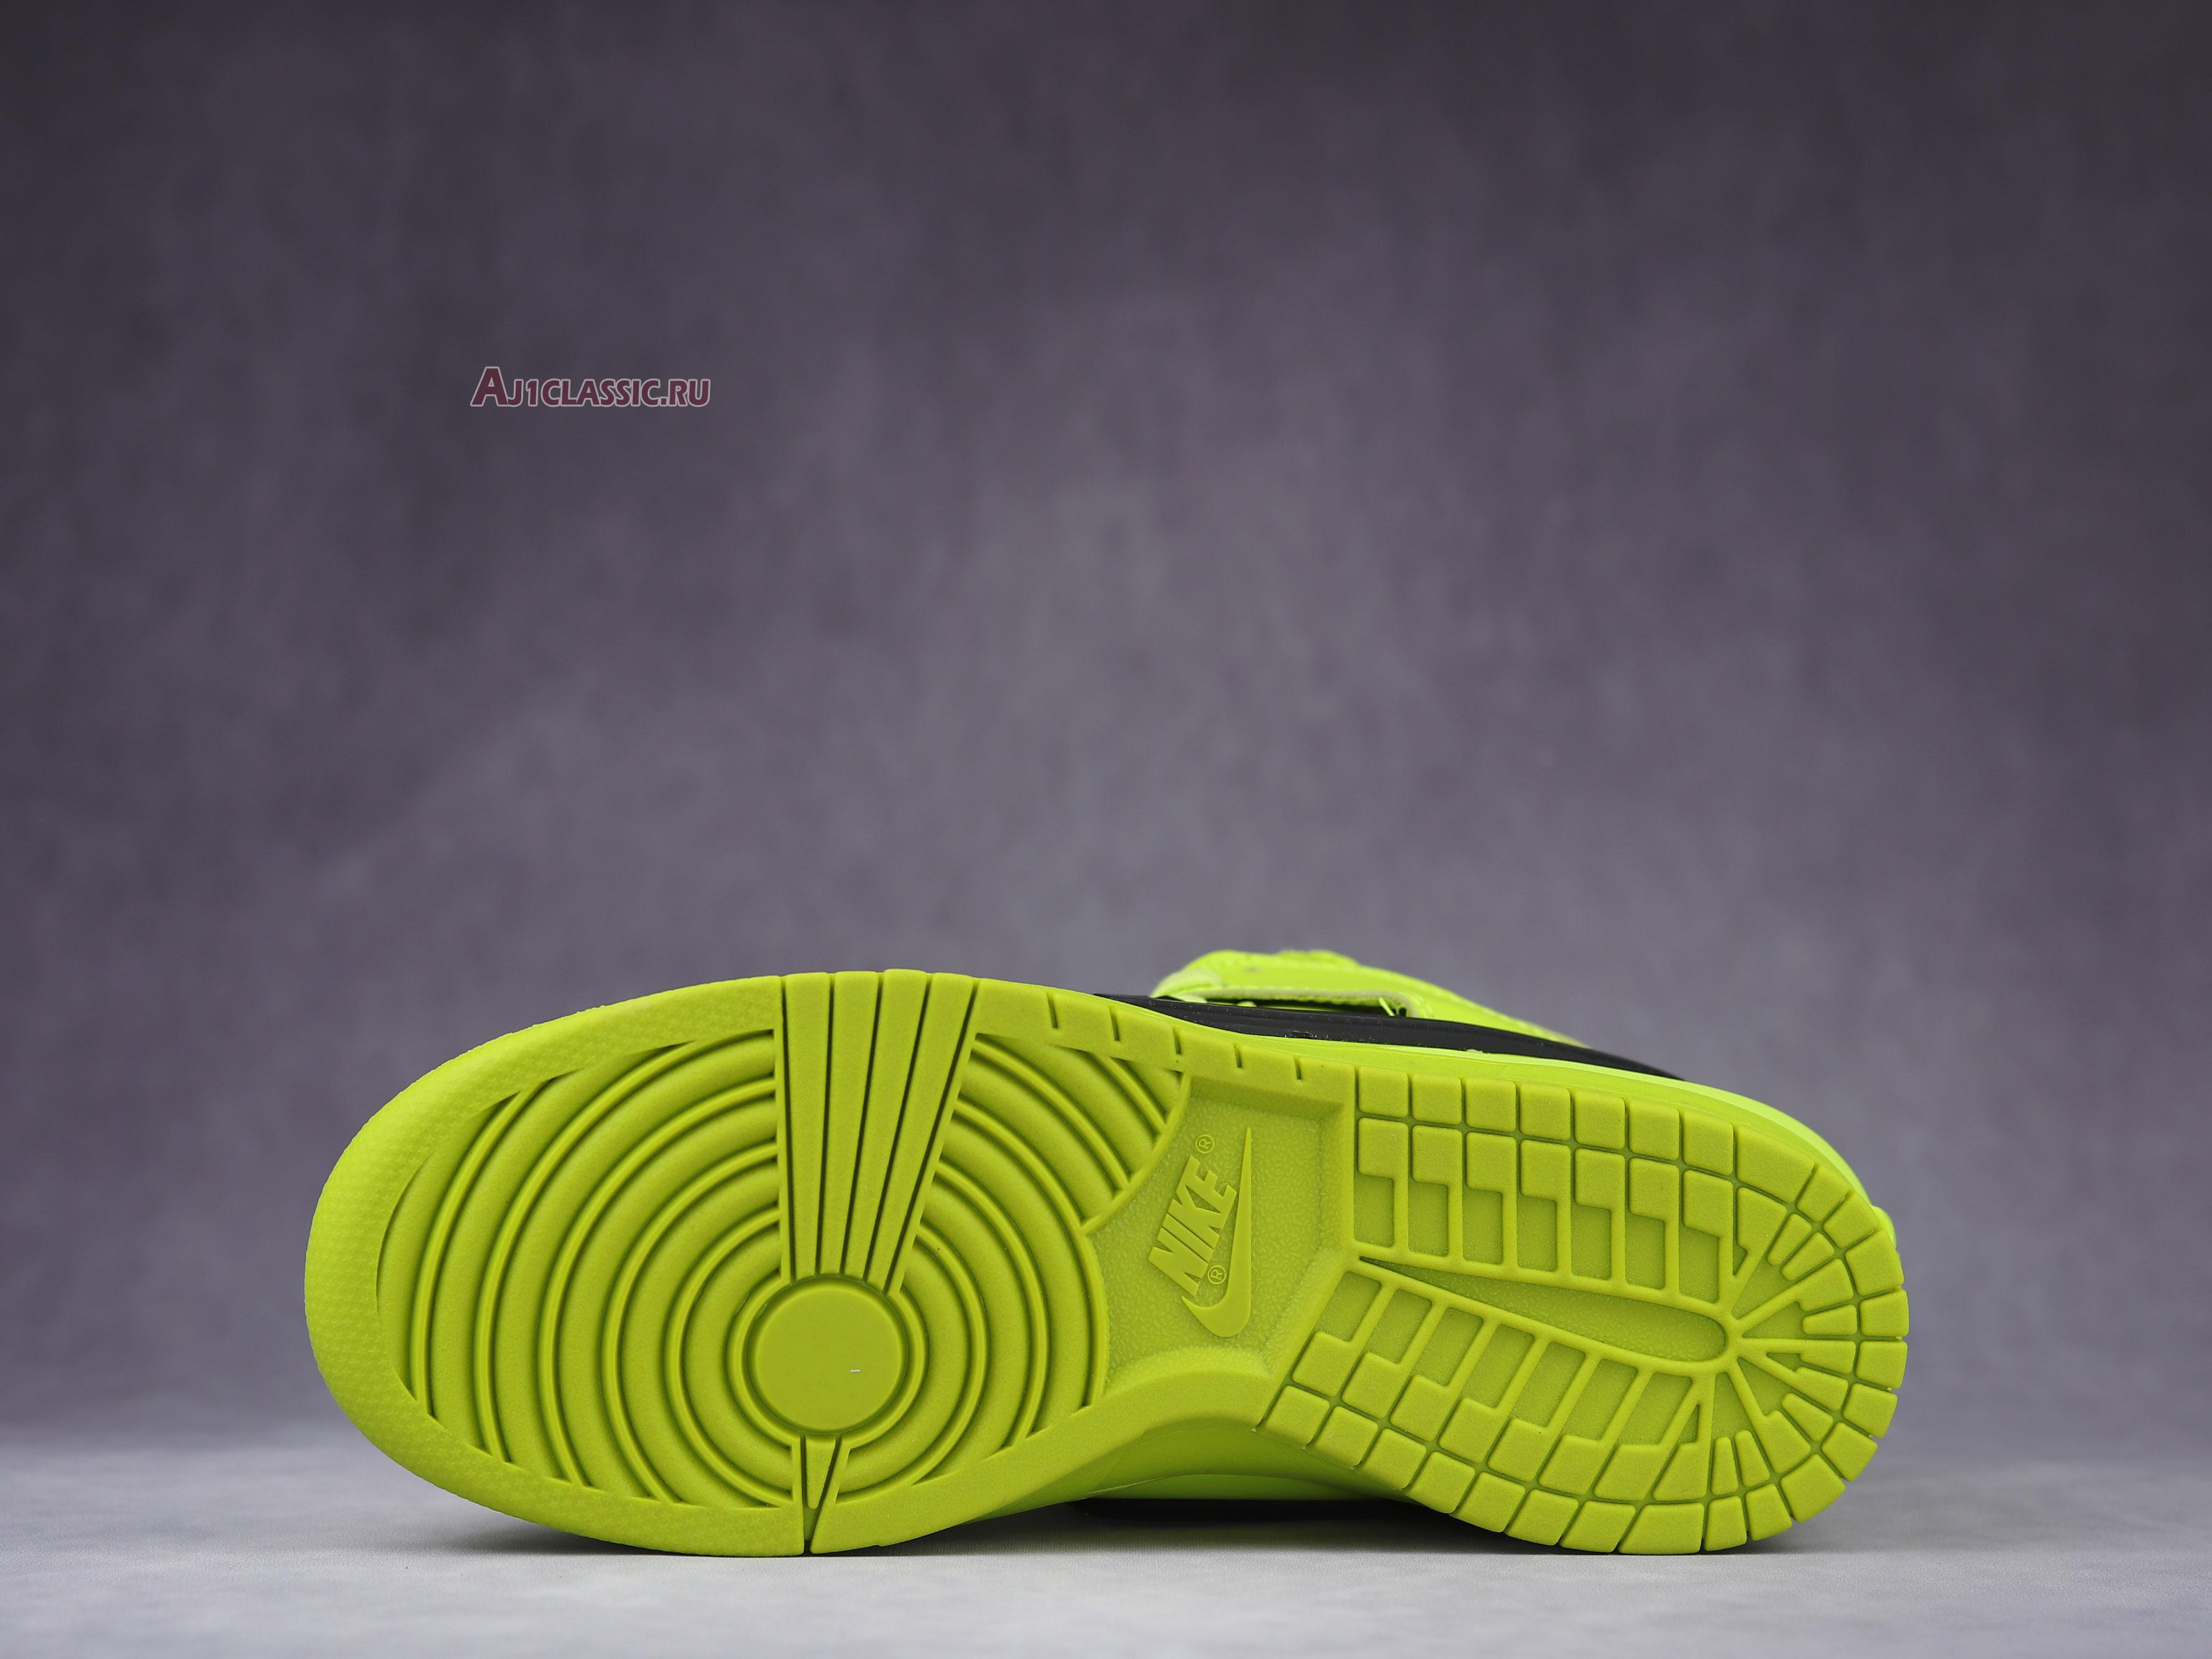 AMBUSH x Nike Dunk High "Flash Lime" CU7544-300